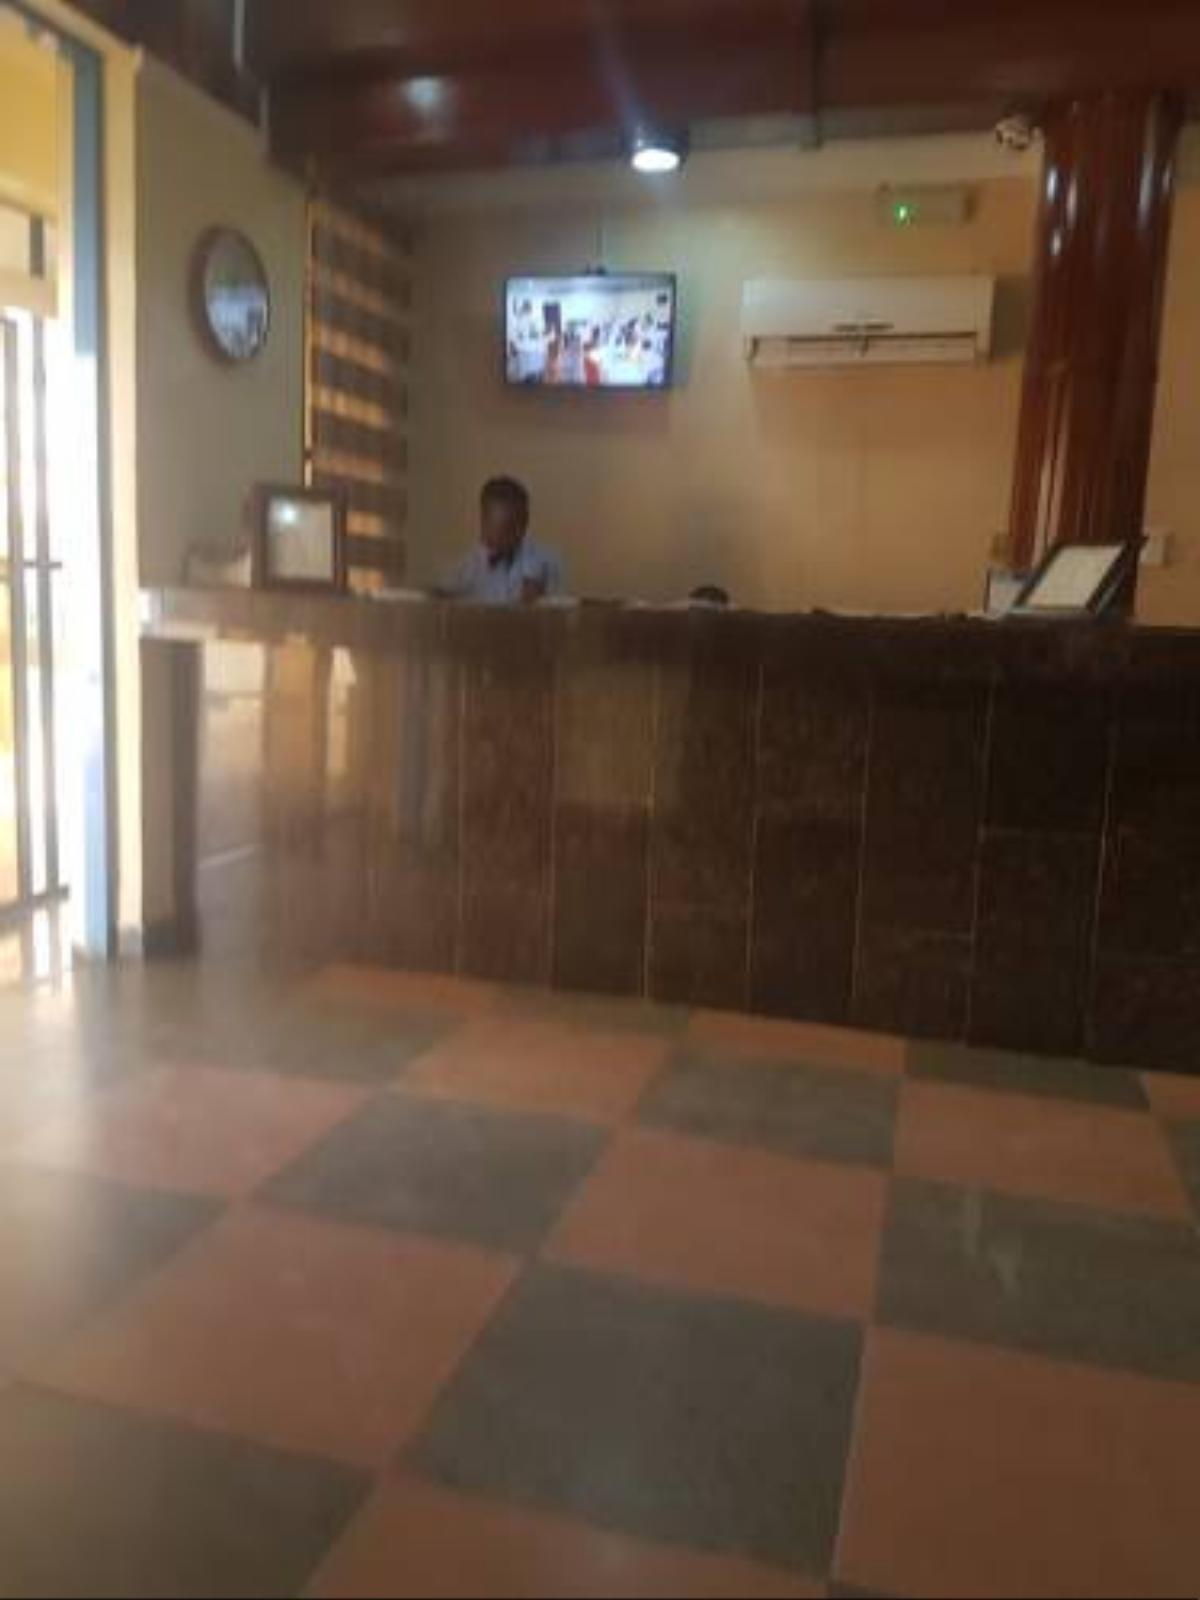 Royalton Palace Hotel Hotel Ilorin Nigeria